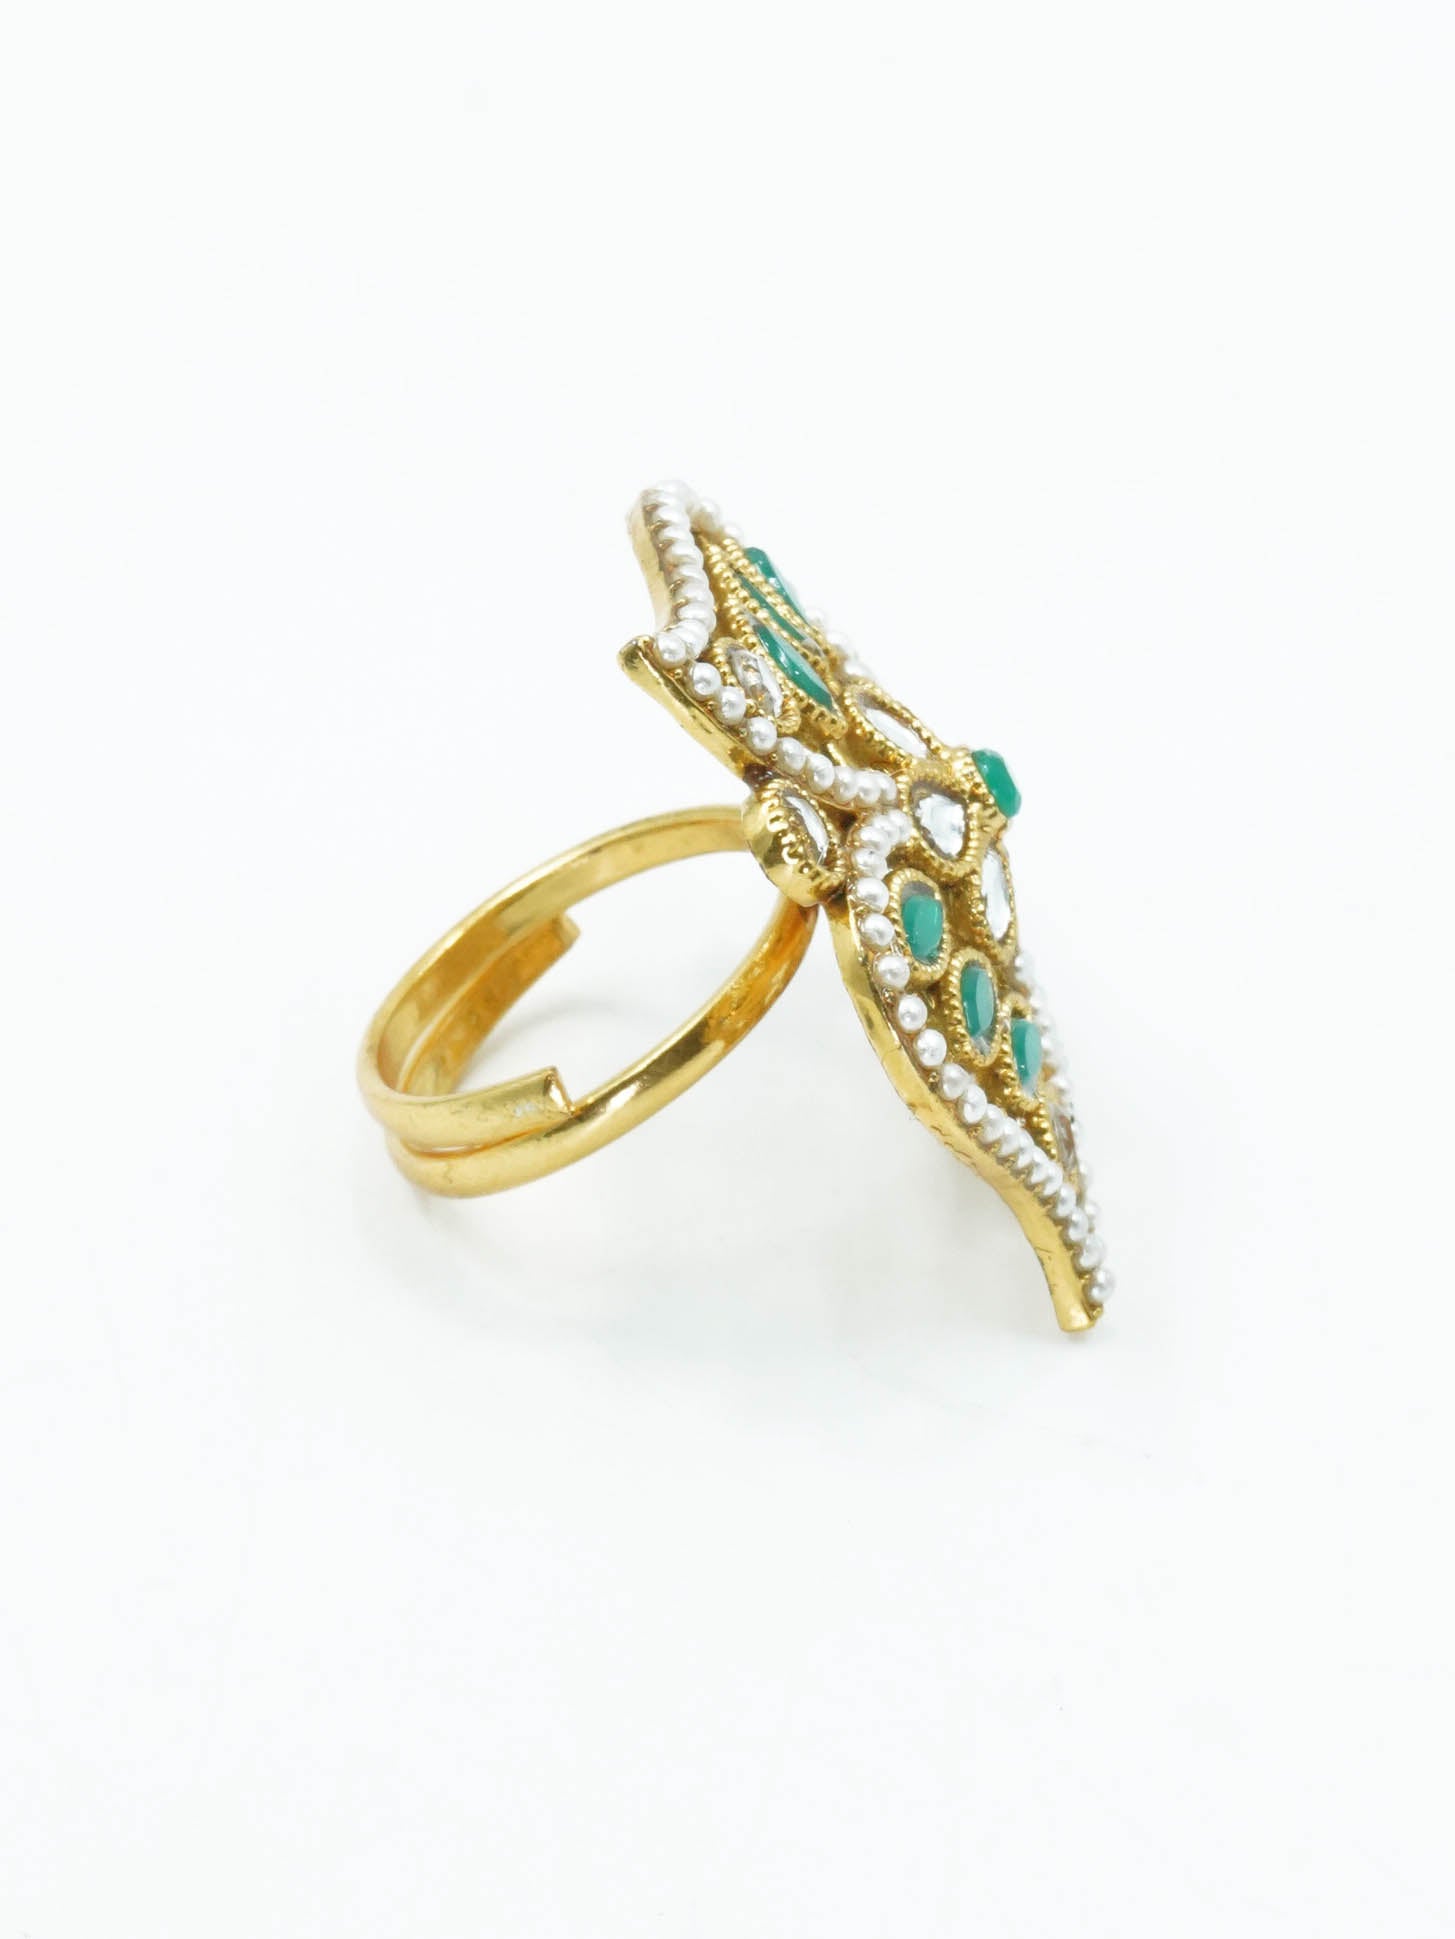 Antique Gold Plated Adjustable Size Designer Finger ring with Stones 10906N